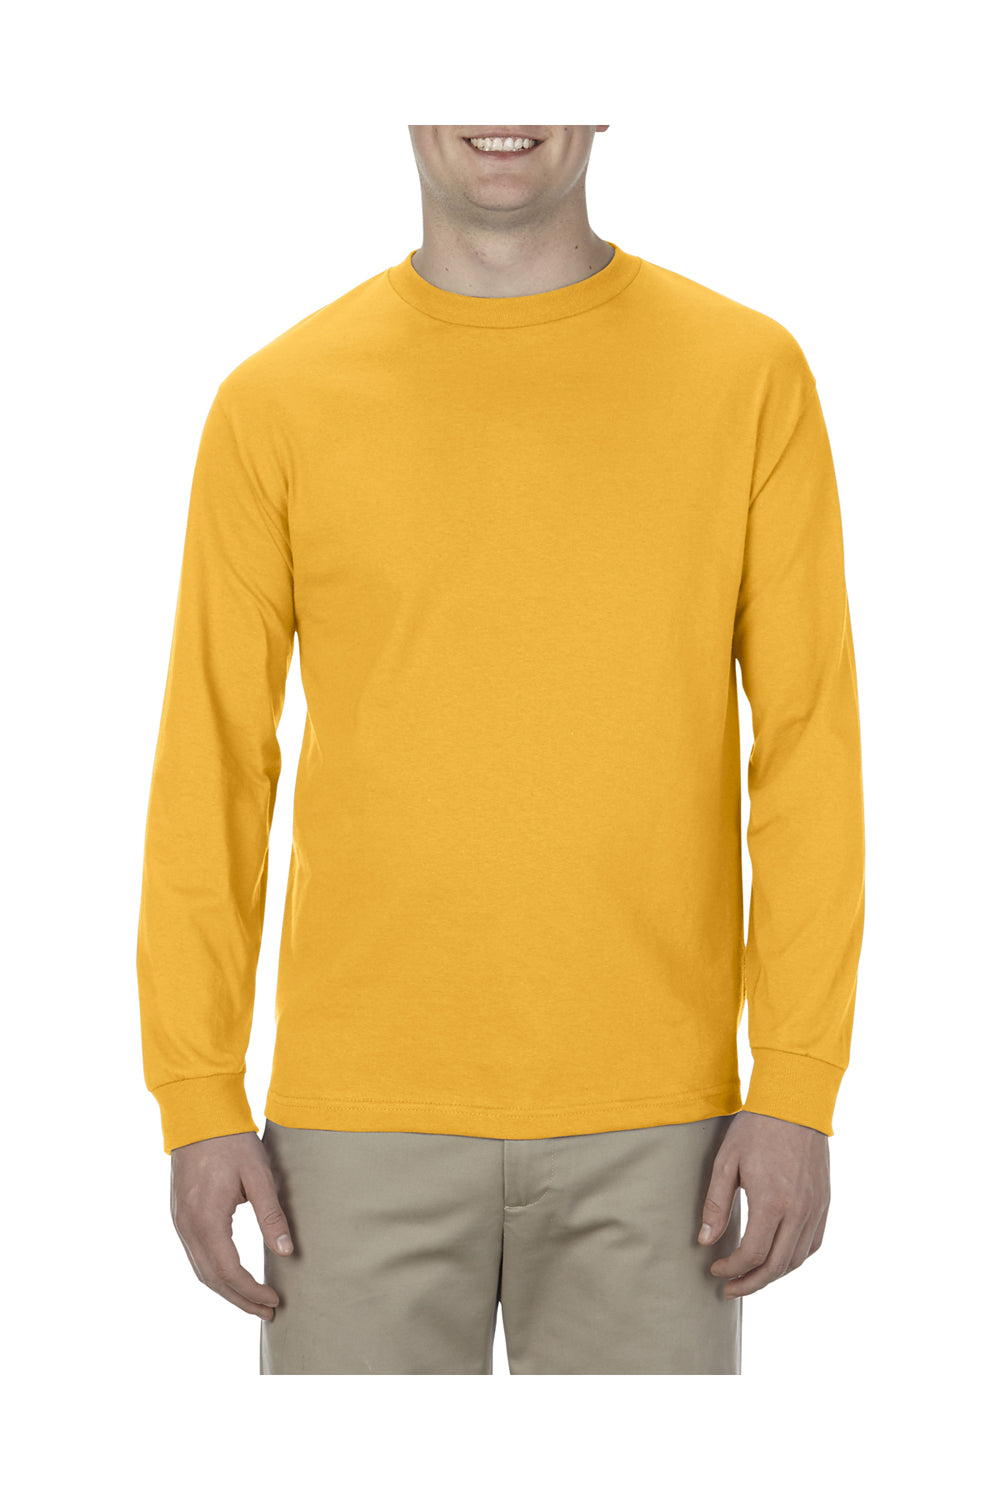 Alstyle AL1304 Mens Long Sleeve Crewneck T-Shirt Gold Front